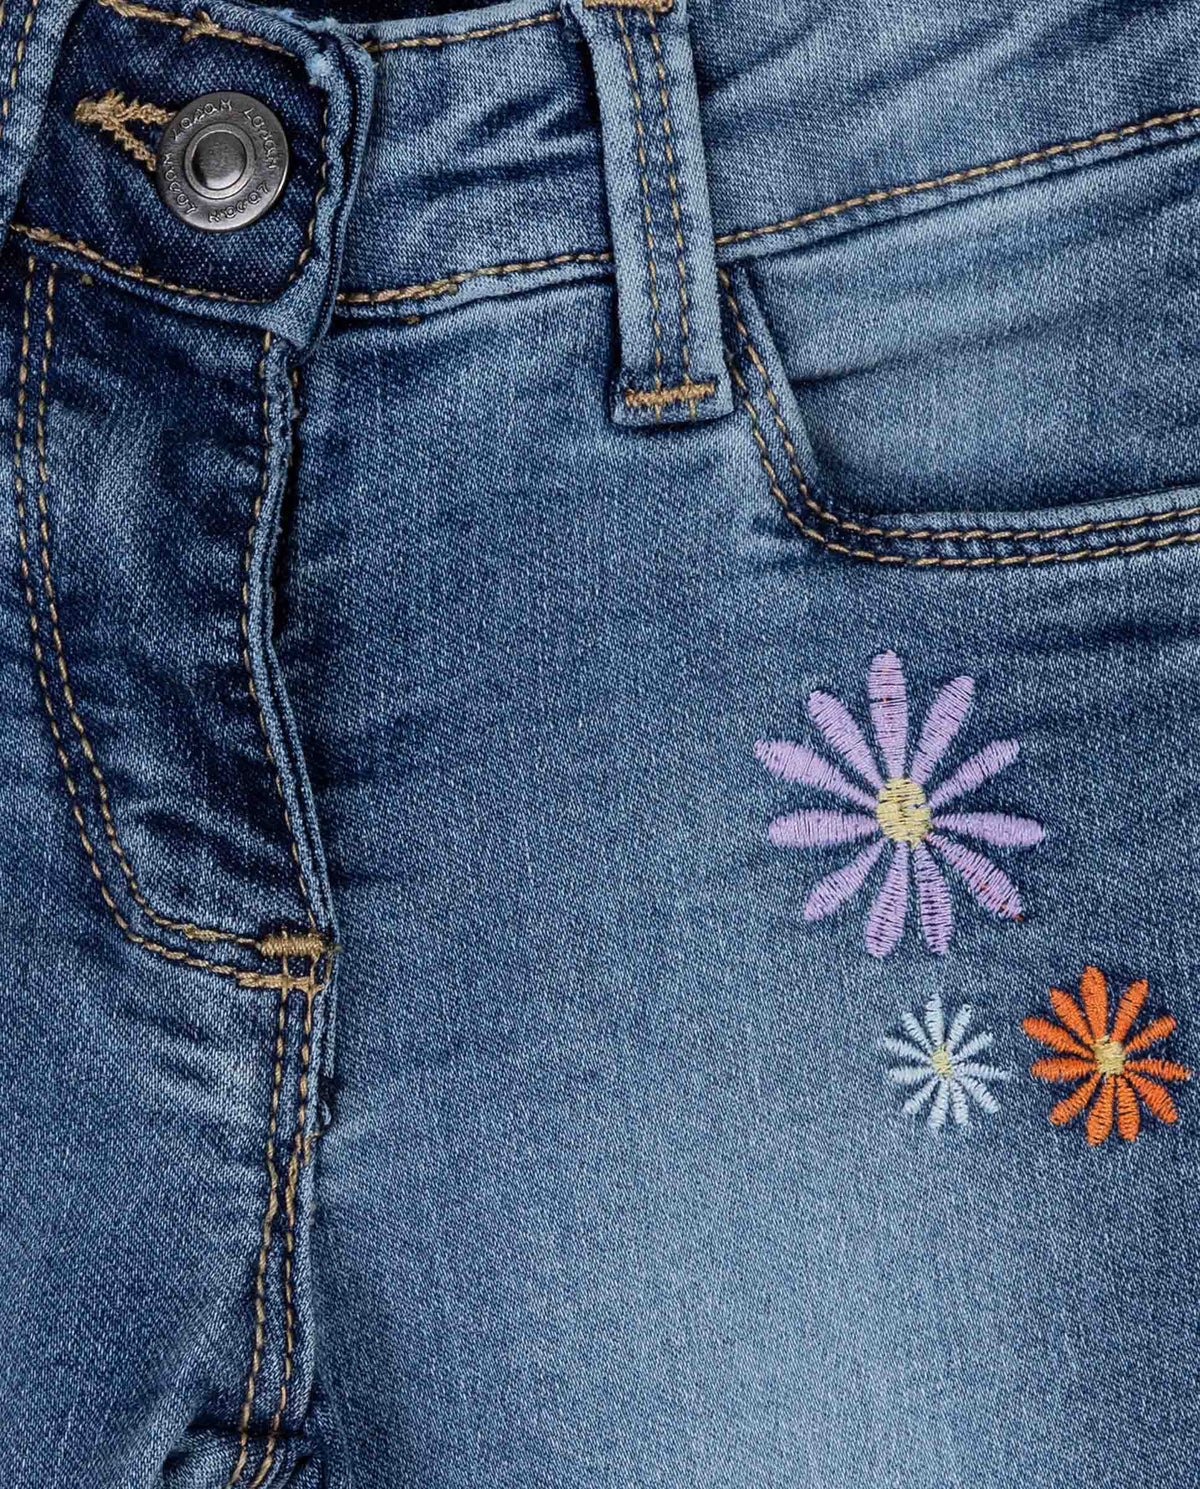 Jeans Flower Power Arcoiris